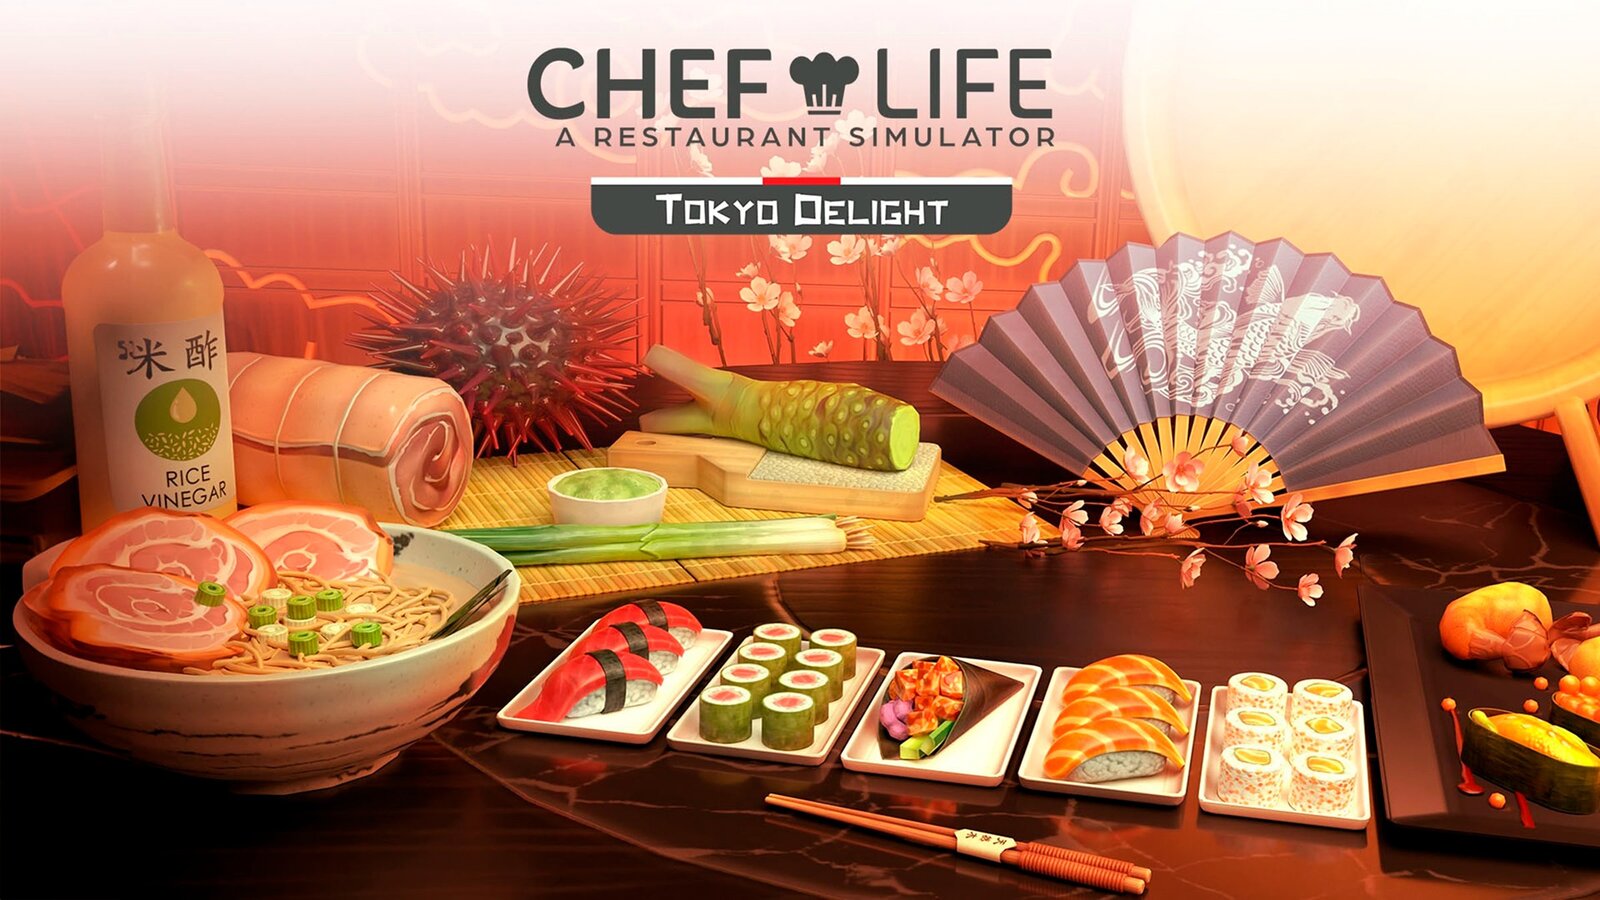 Chef Life: A Restaurant Simulator - Tokyo Delight